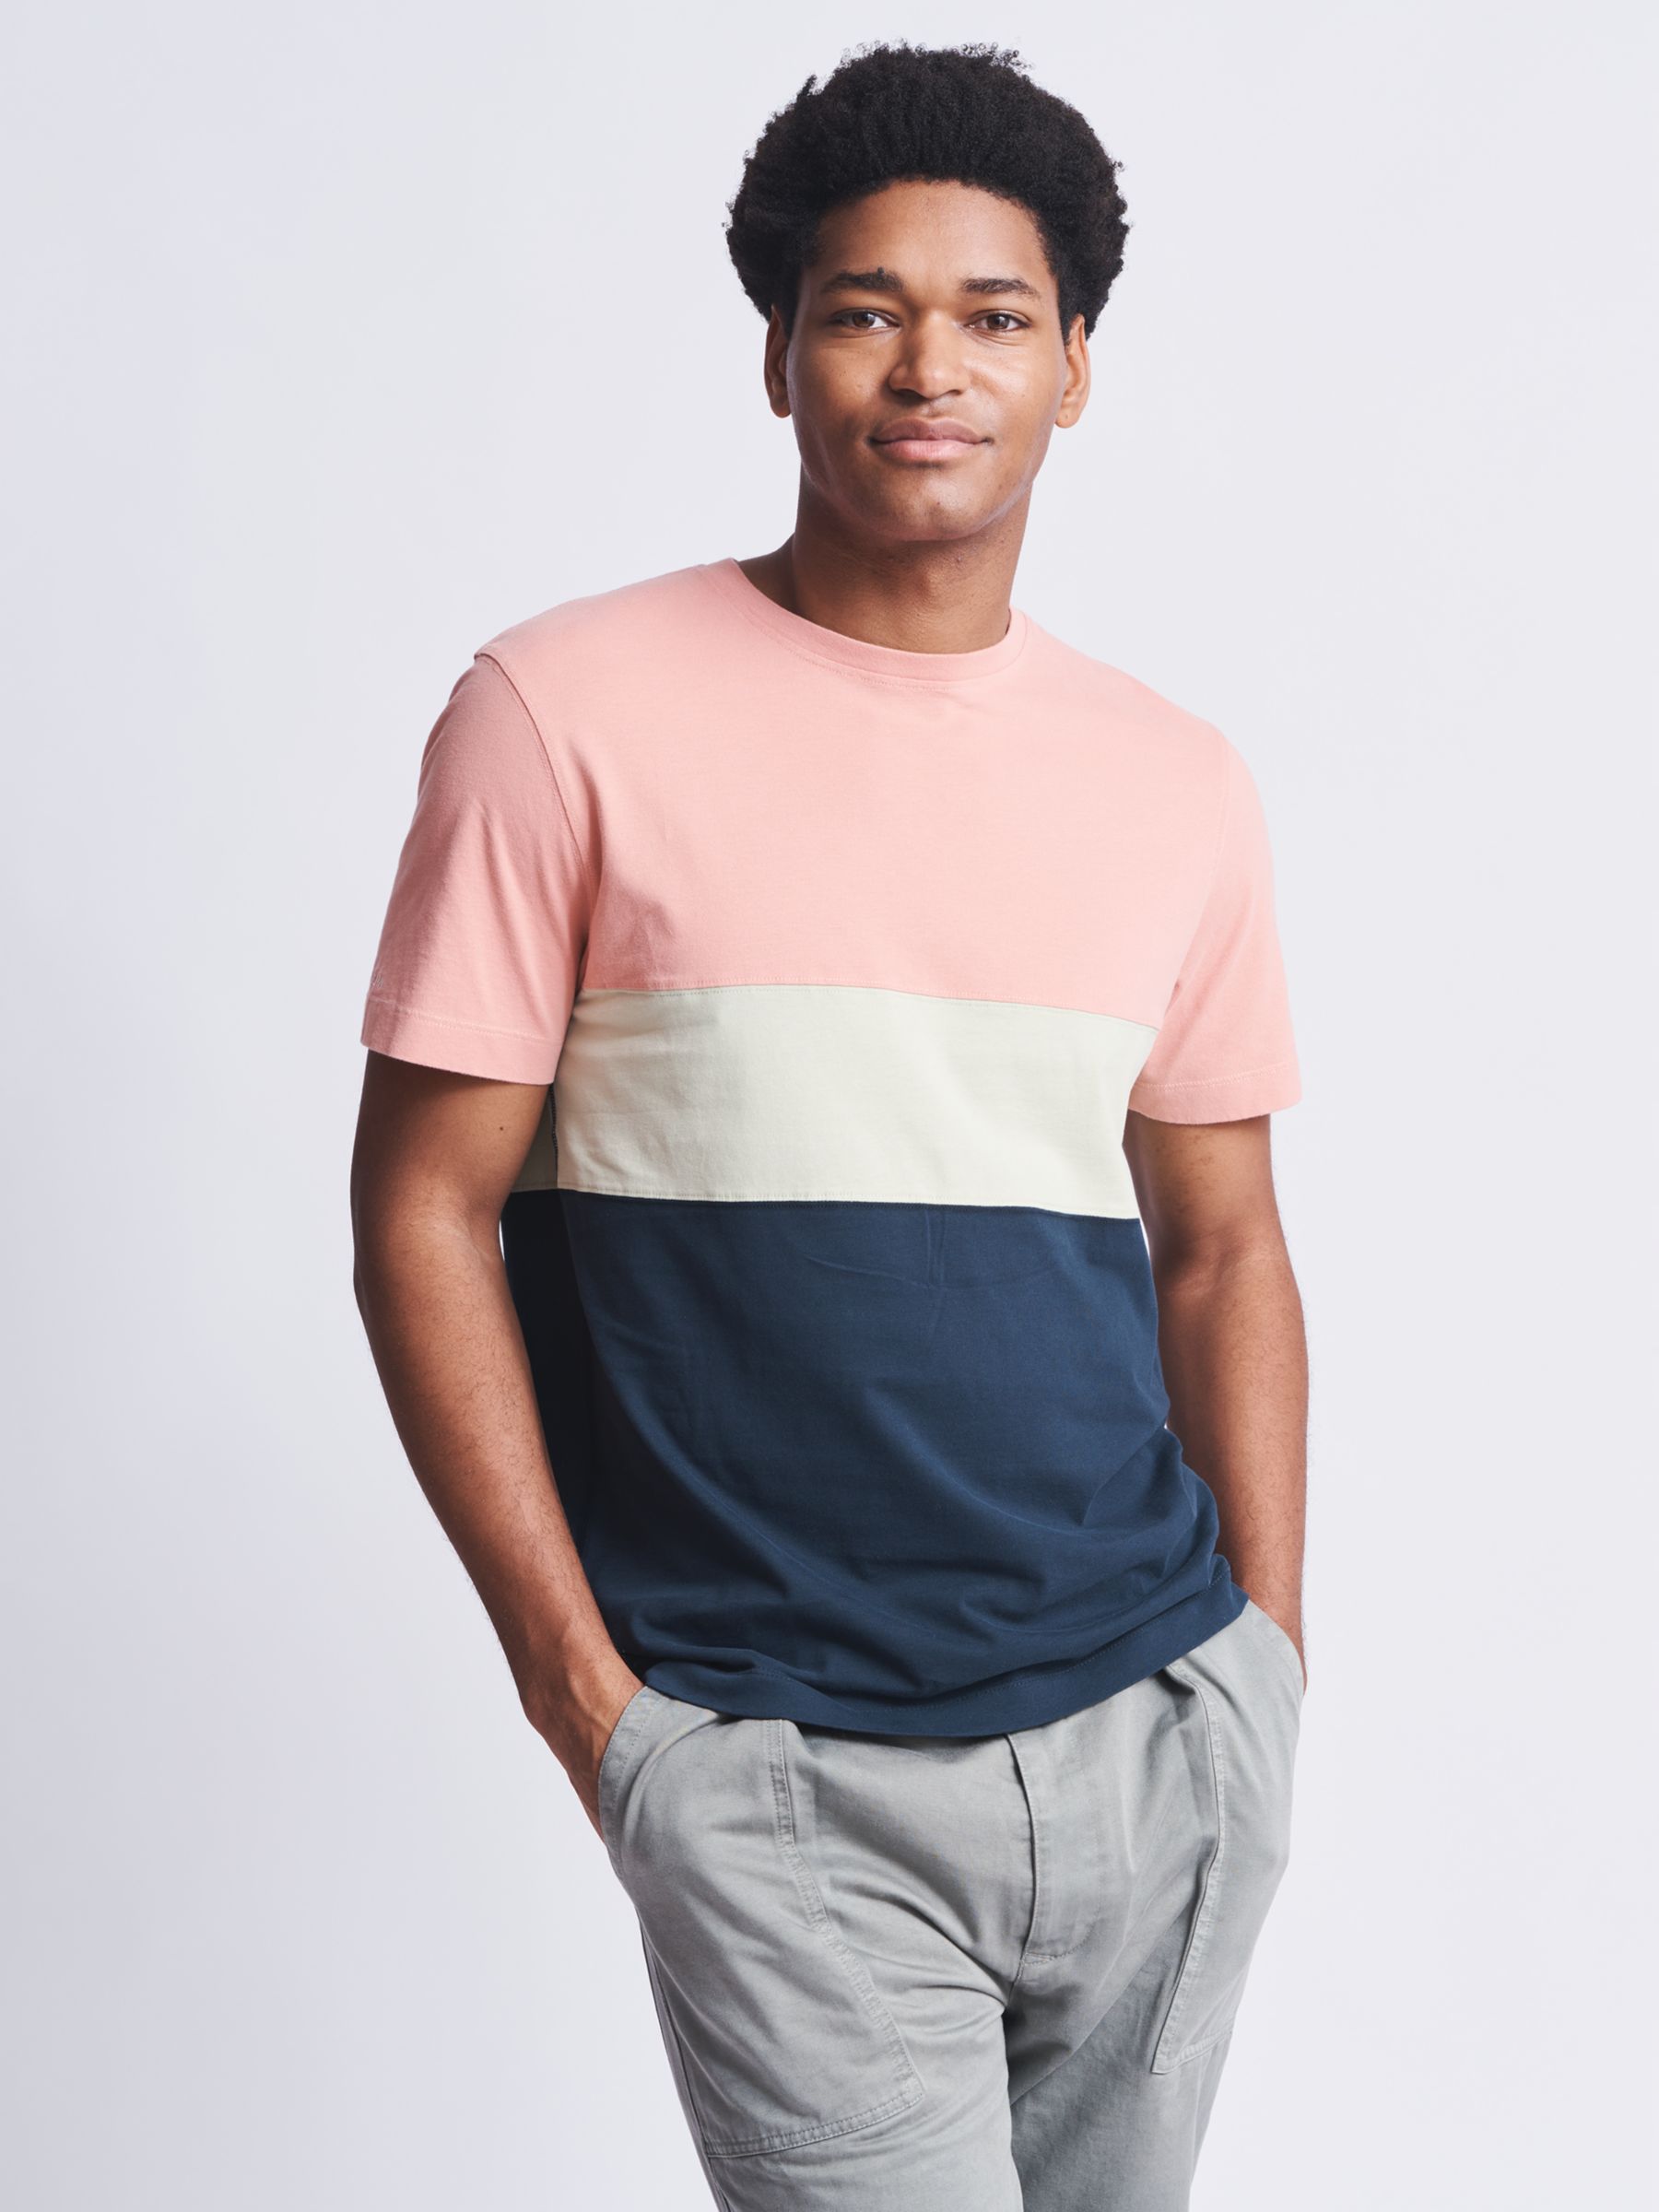 Aubin Calder Cut & Sew T-Shirt, Multi, S